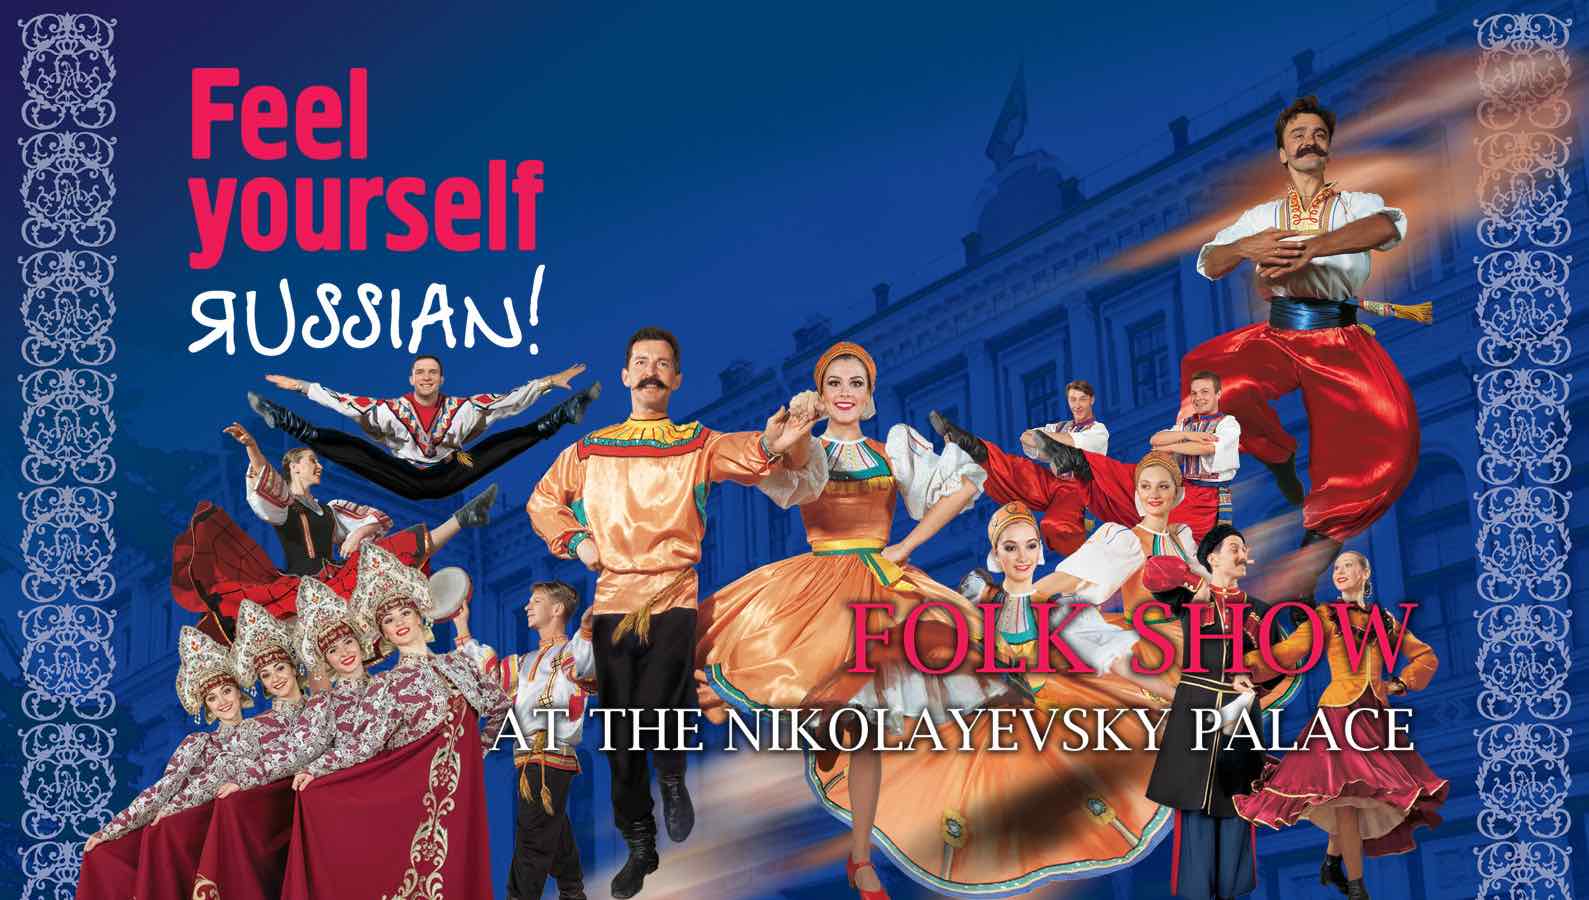 Feel yourself Russian - Folk Show